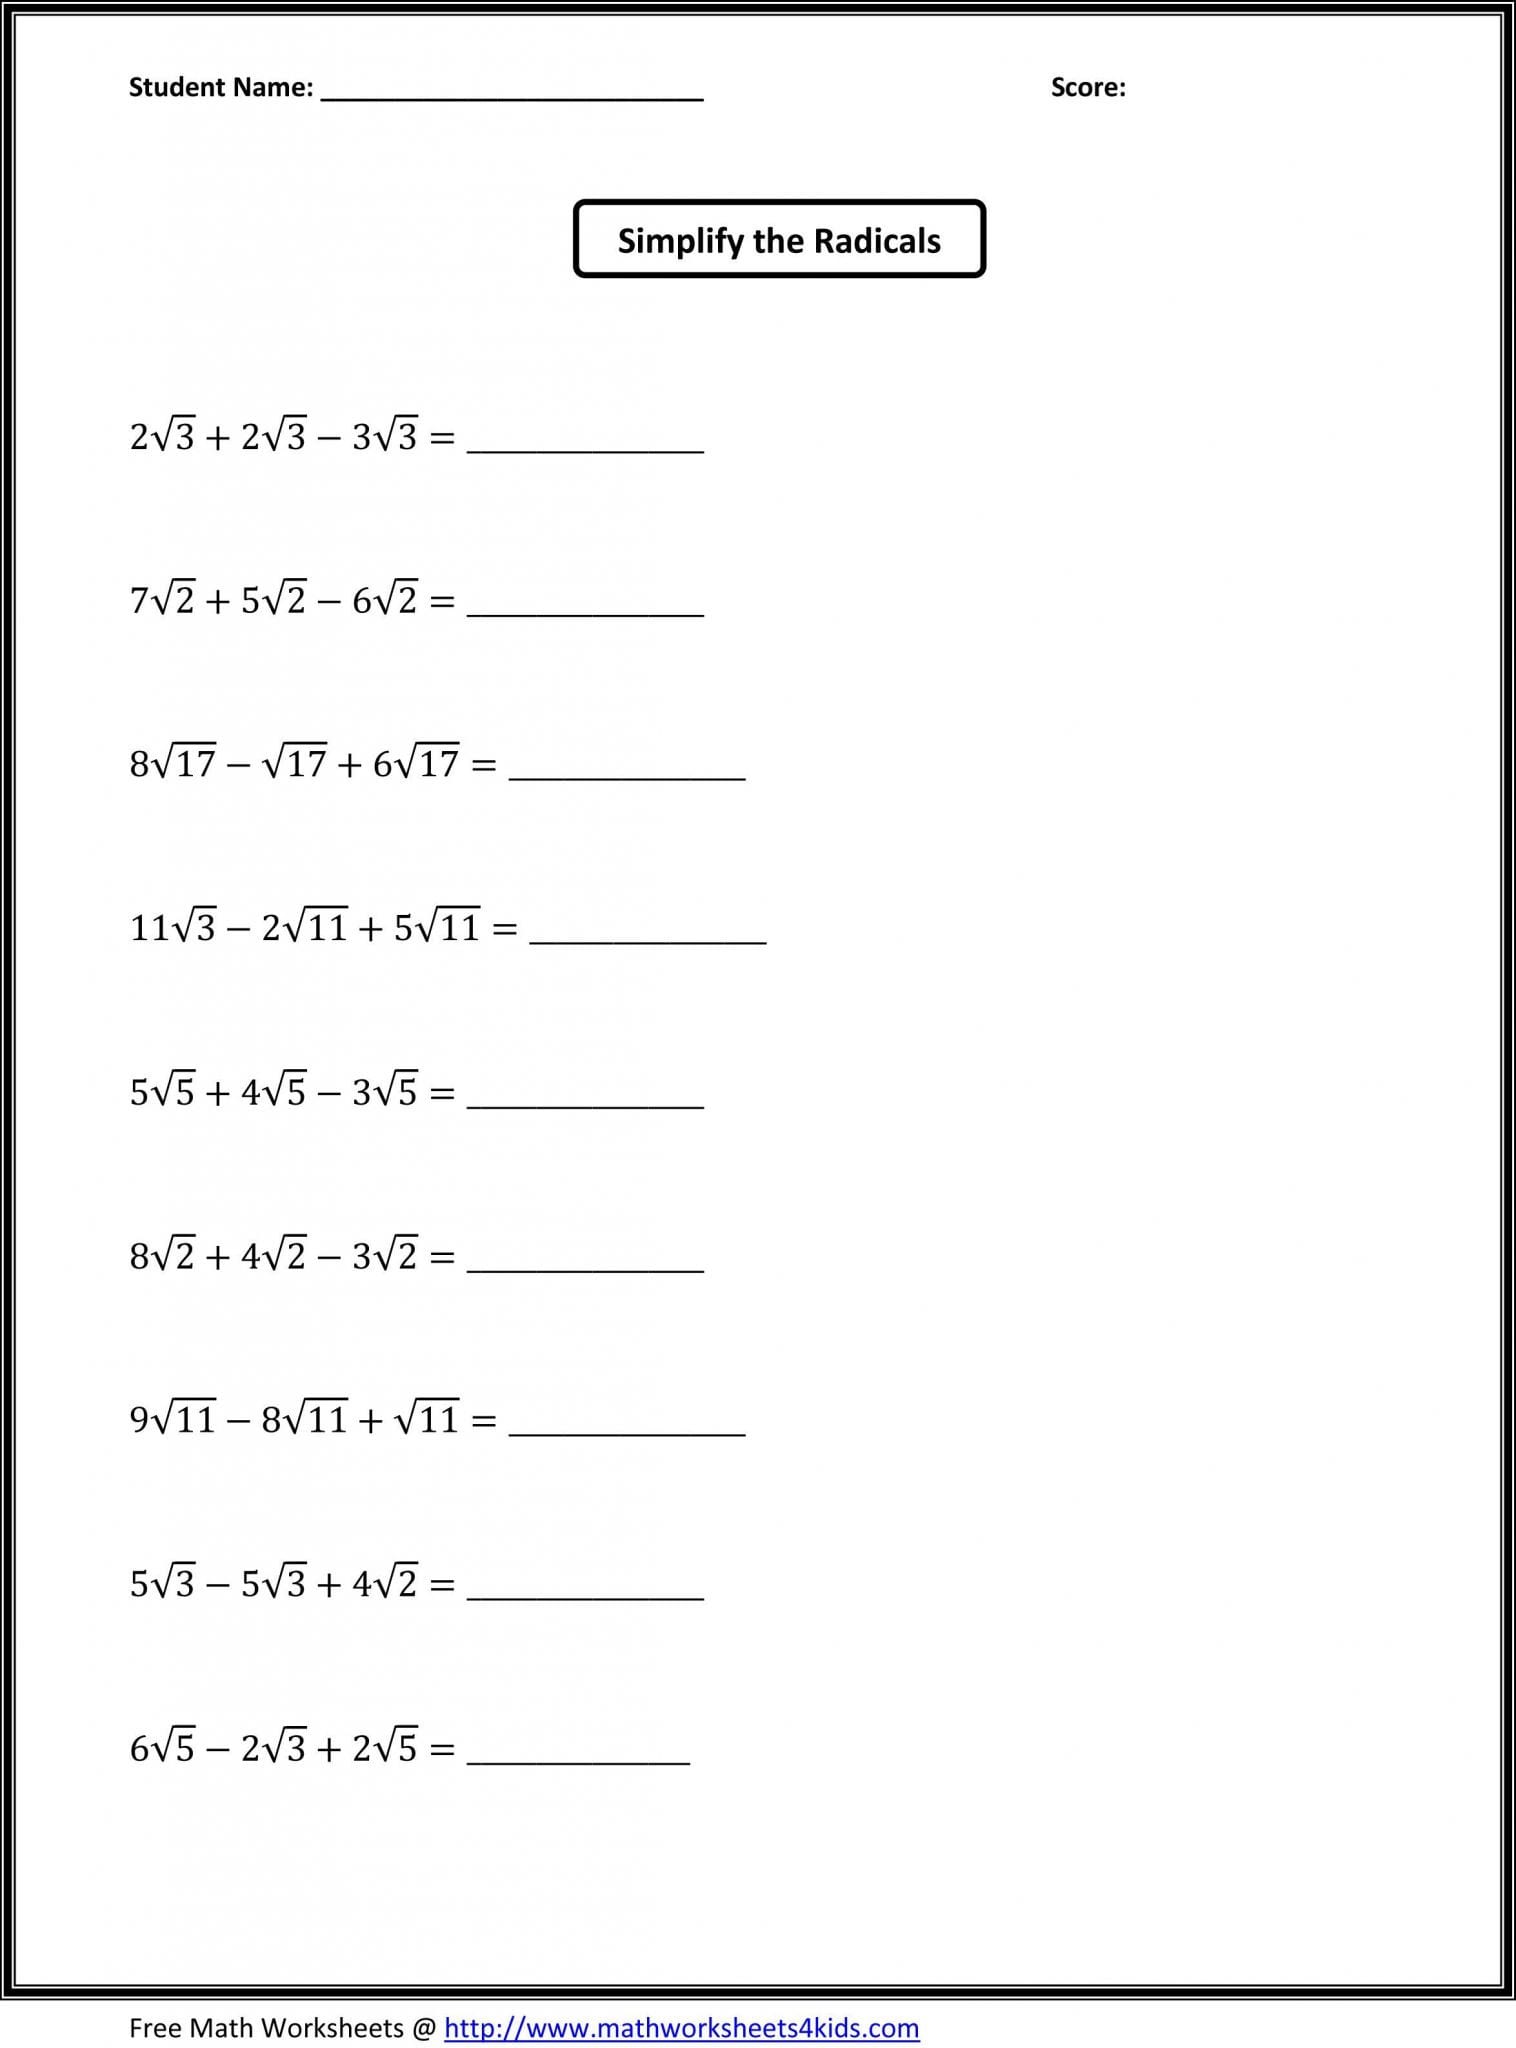 Simplifying Radicals Geometry Worksheet